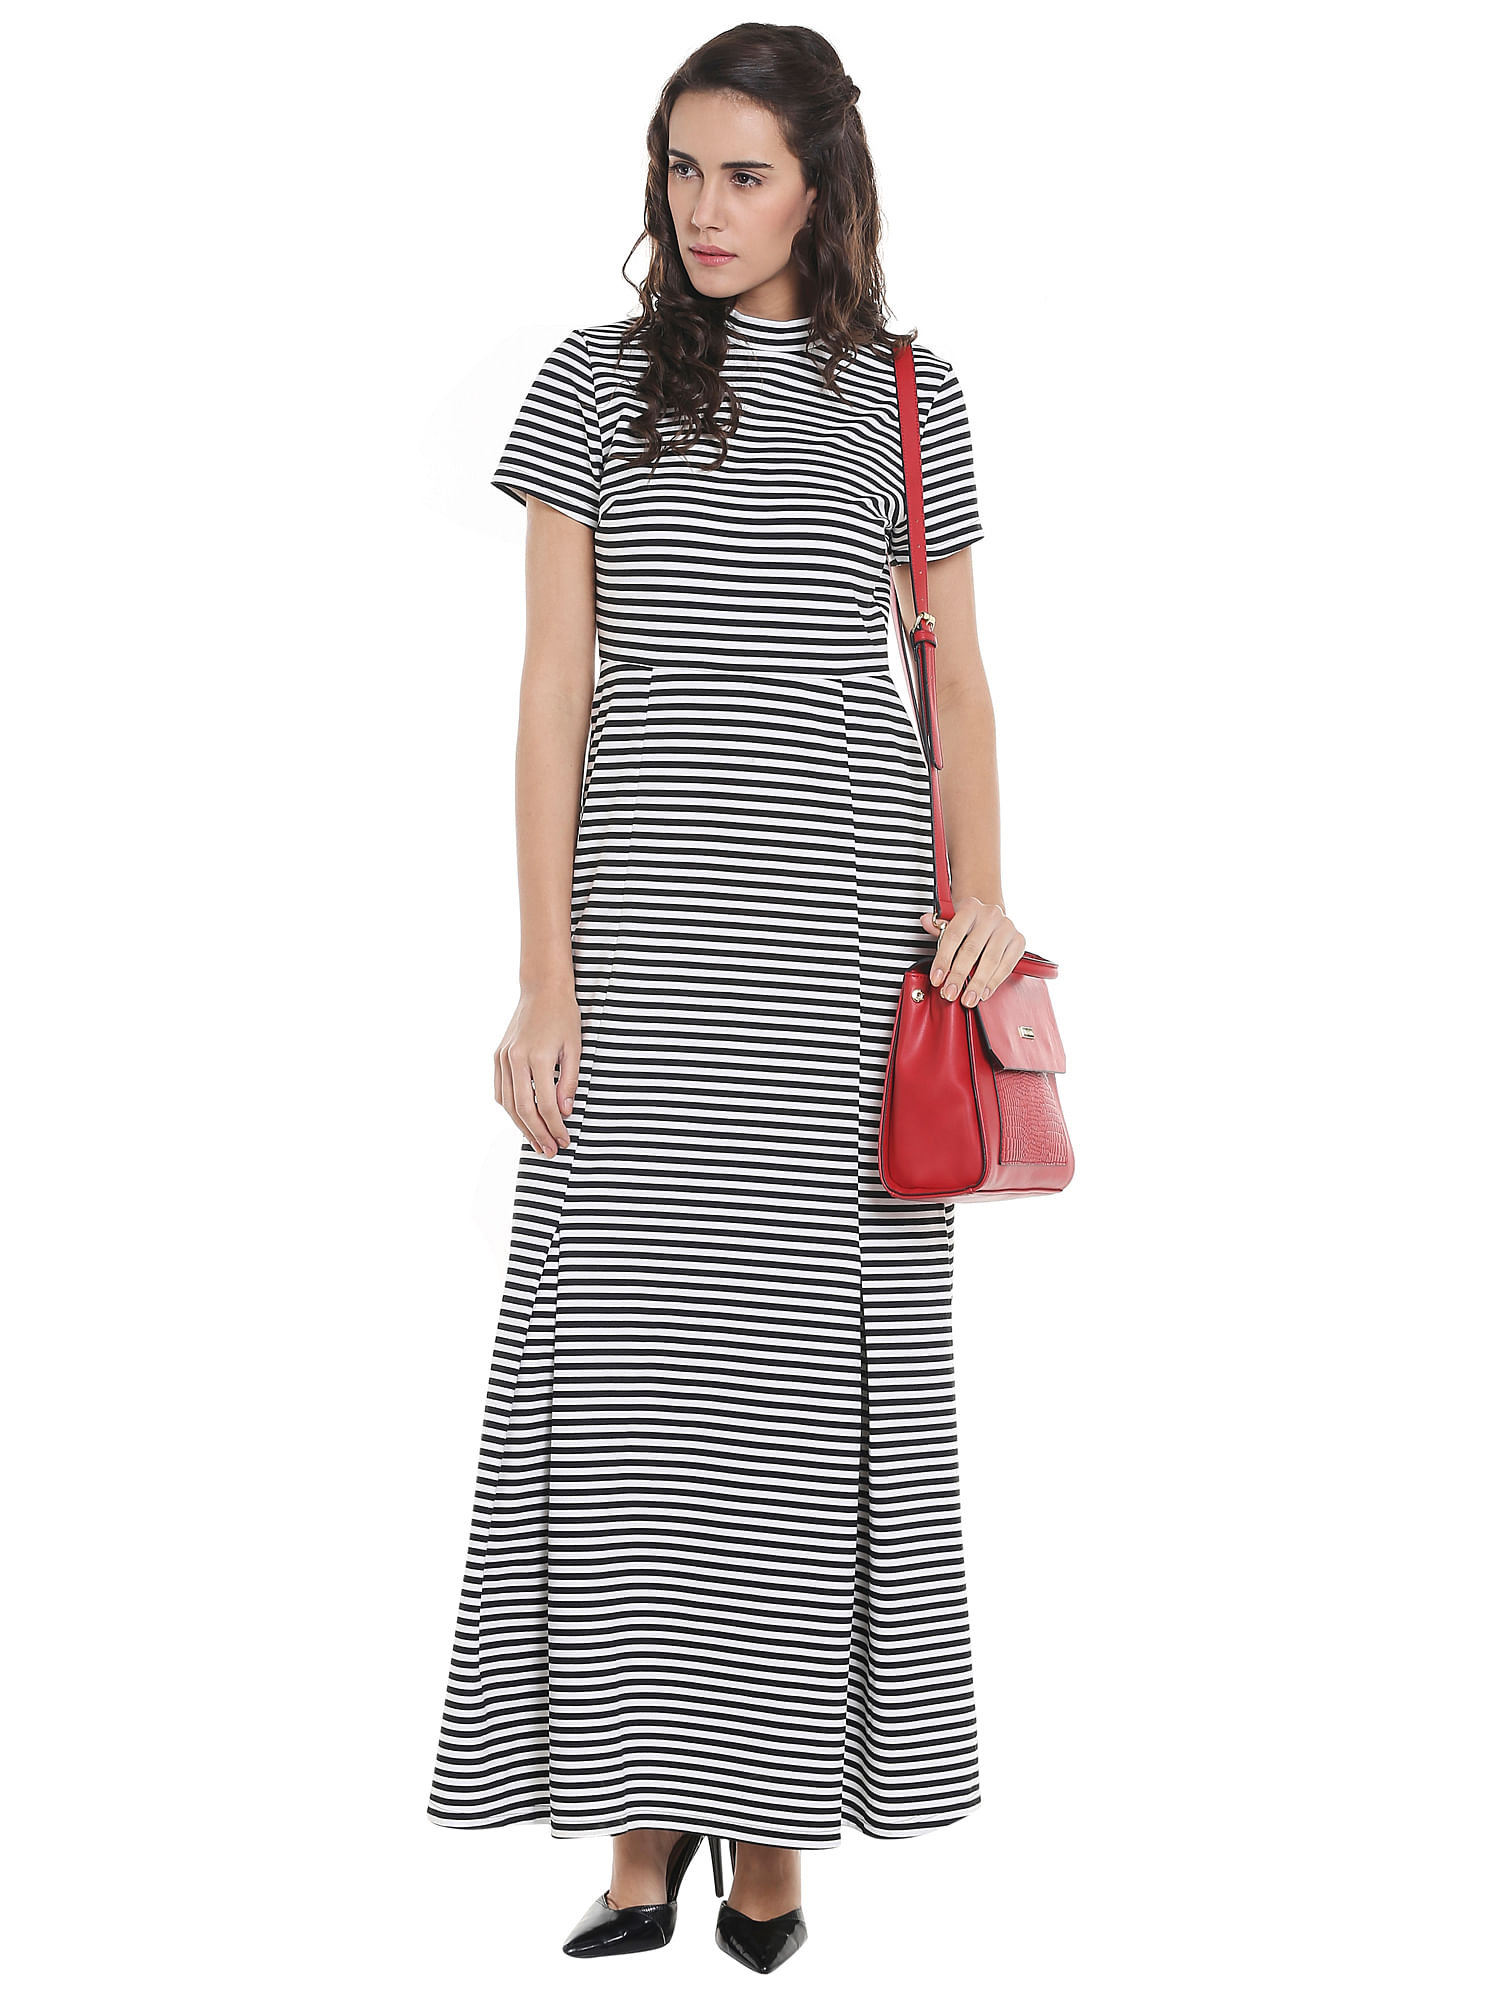 vero moda black and white striped dress